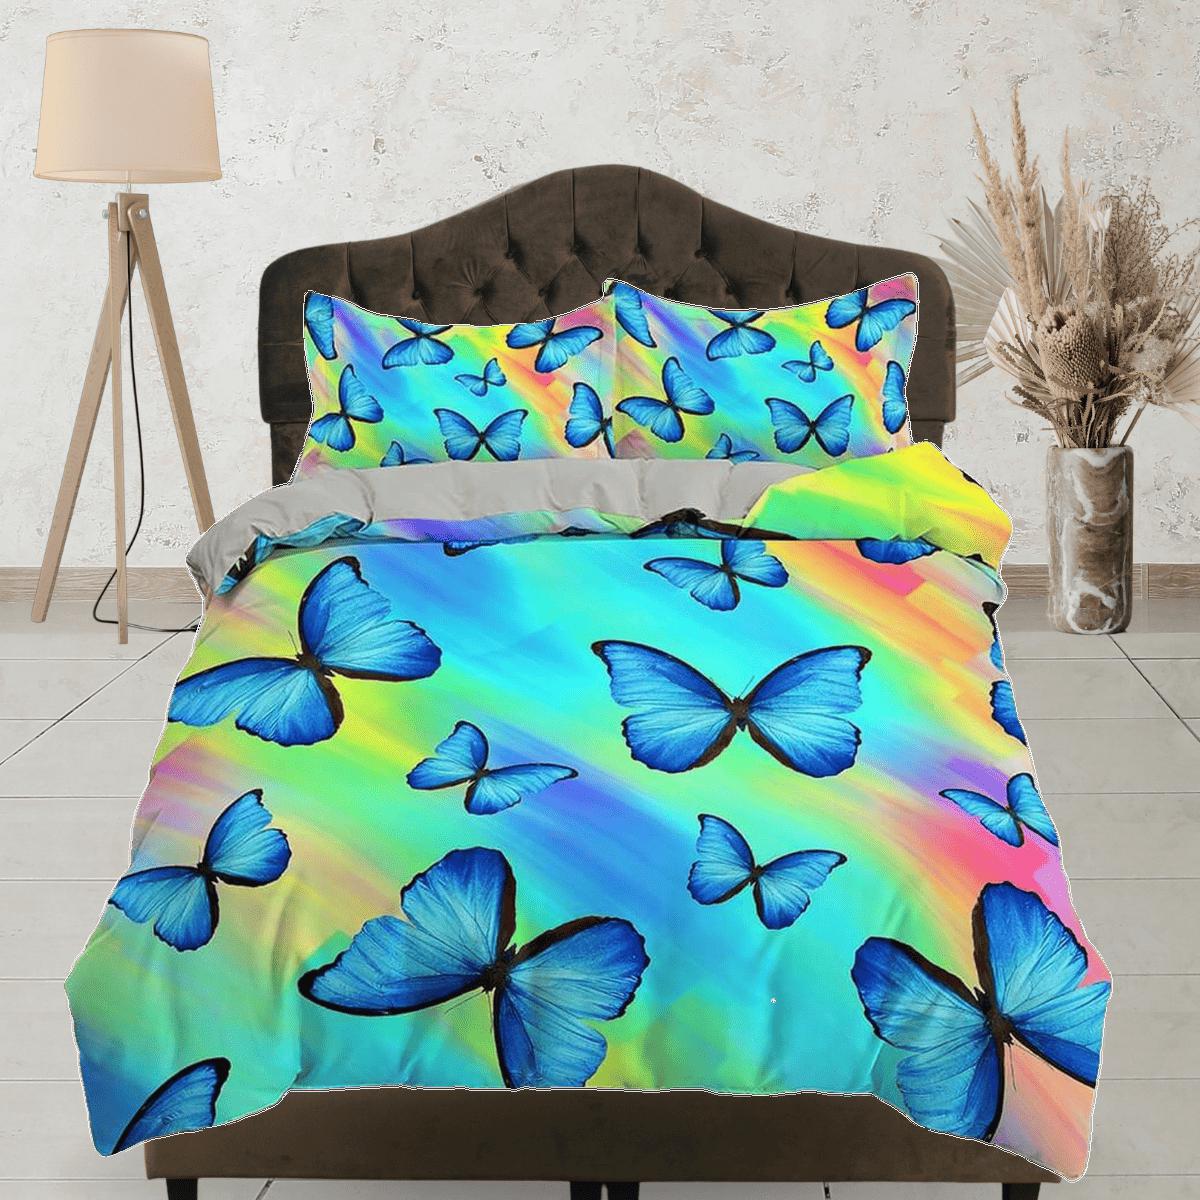 daintyduvet Blue butterfly colorful bedding duvet cover boho chic dorm bedding full size adult duvet king queen twin, butterfly nursery toddler bedding